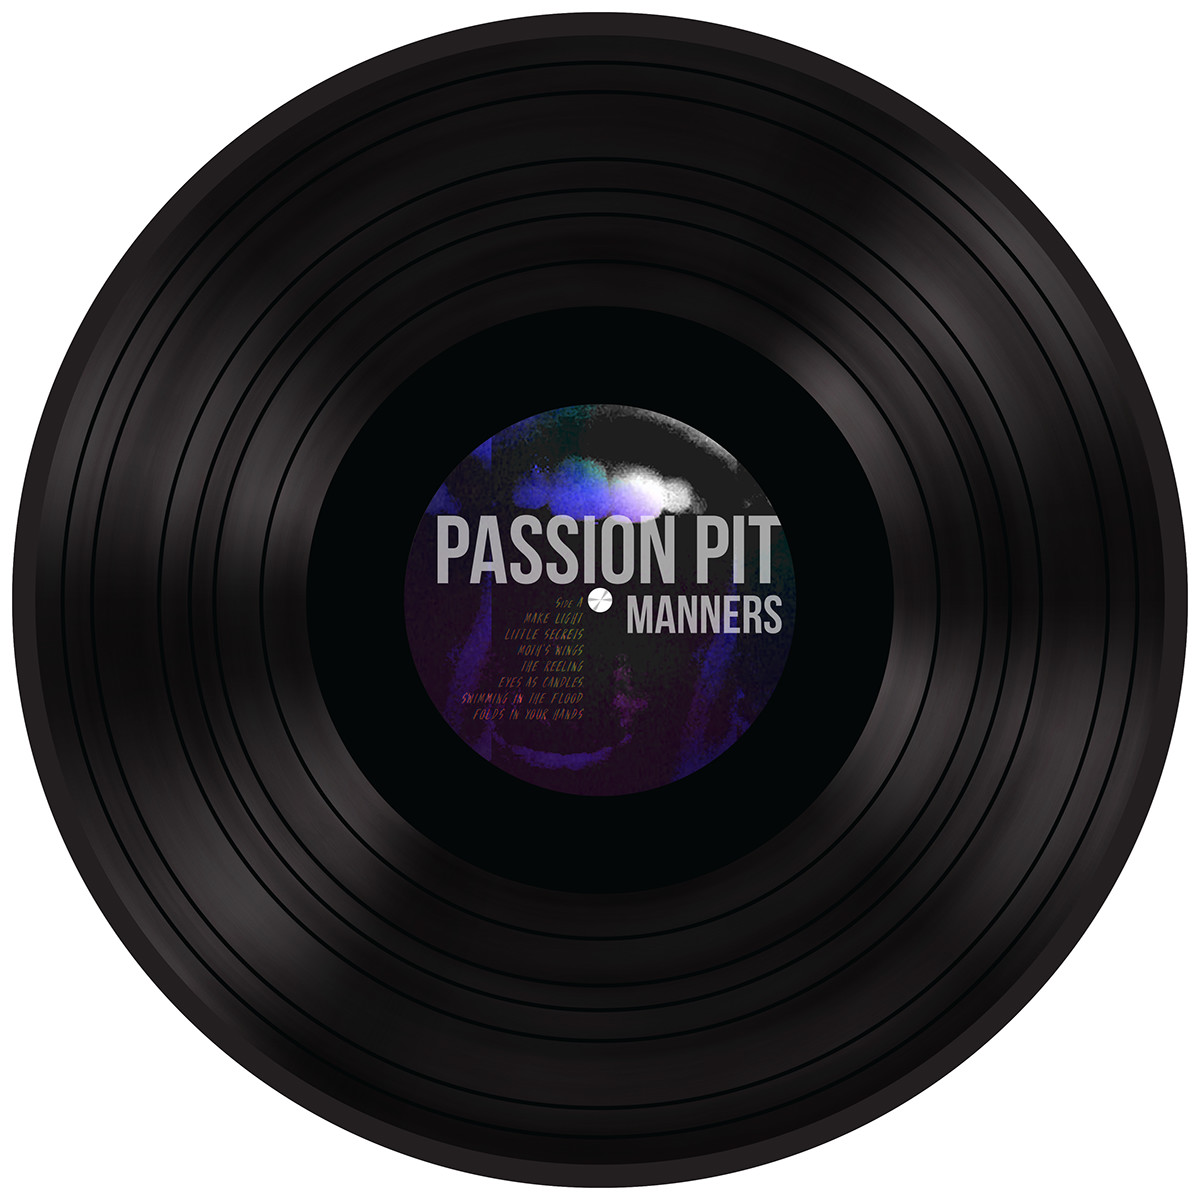 CCAD vinyl design album cover Pixel art Passion Pit